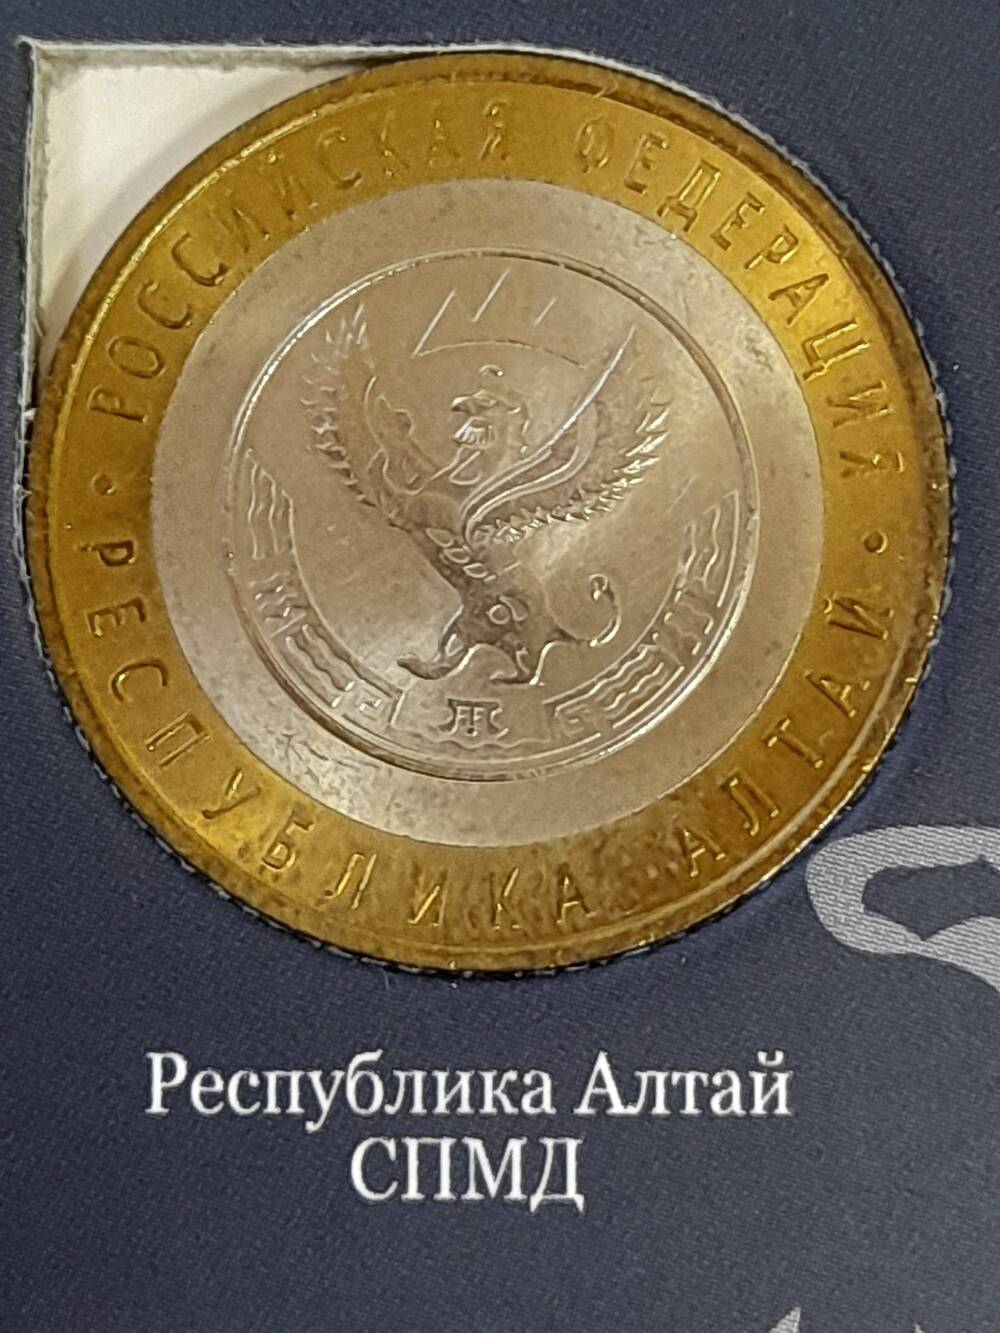 Монета памятная 10 РУБЛЕЙ. Республика Алтай 2006 г. Россия